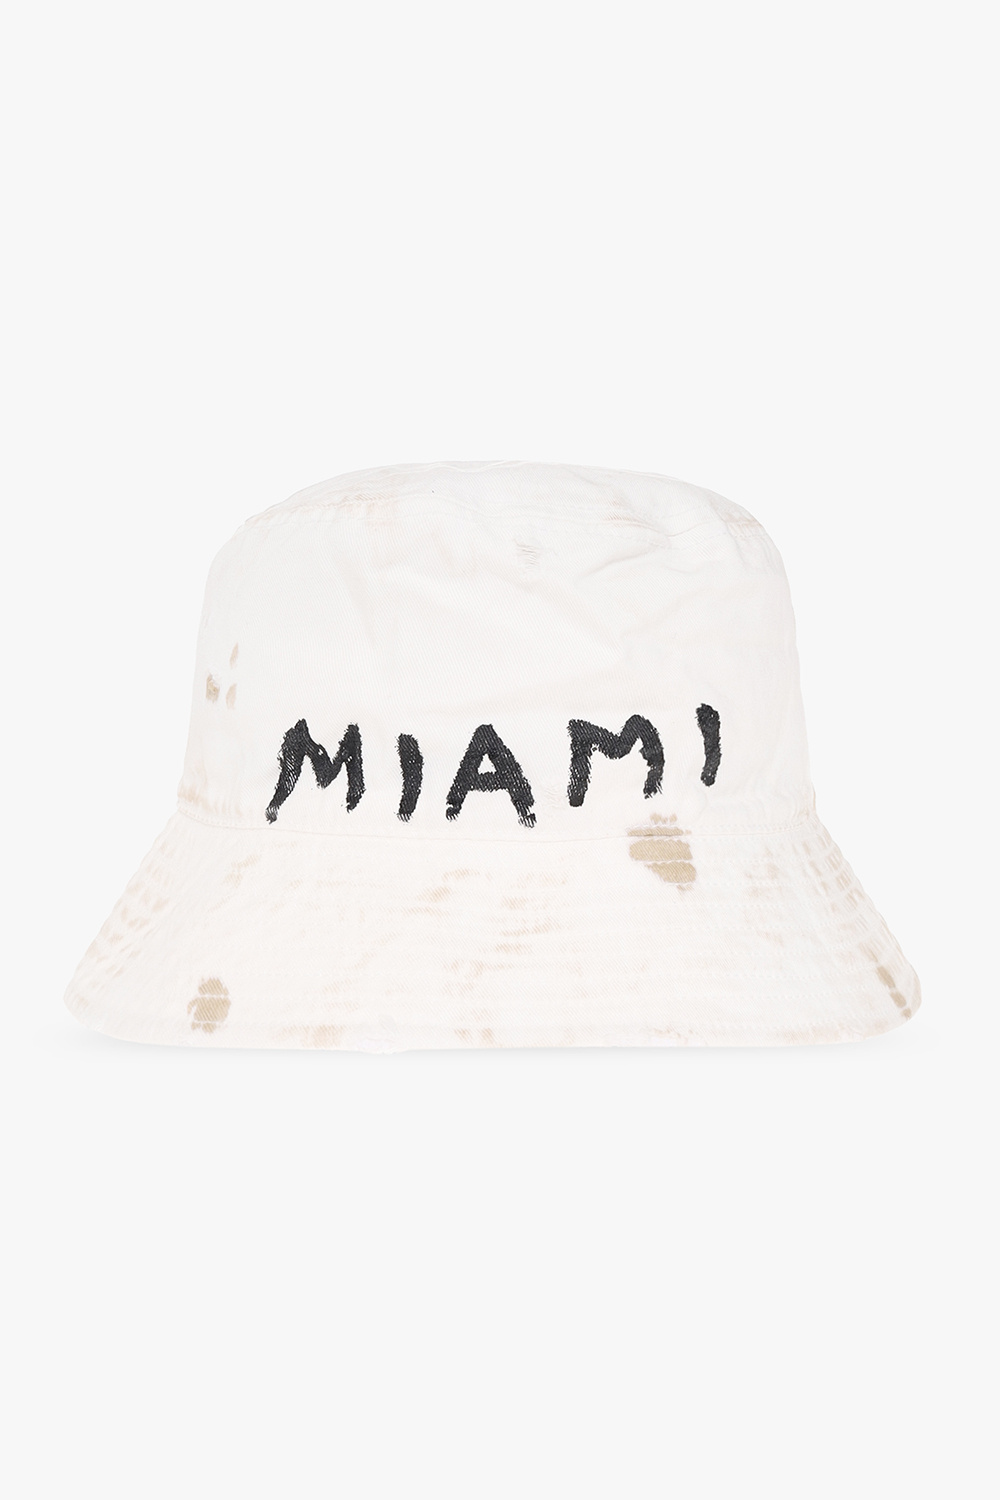 Men's New Era Camo Houston Astros Basic 9FIFTY Snapback Hat